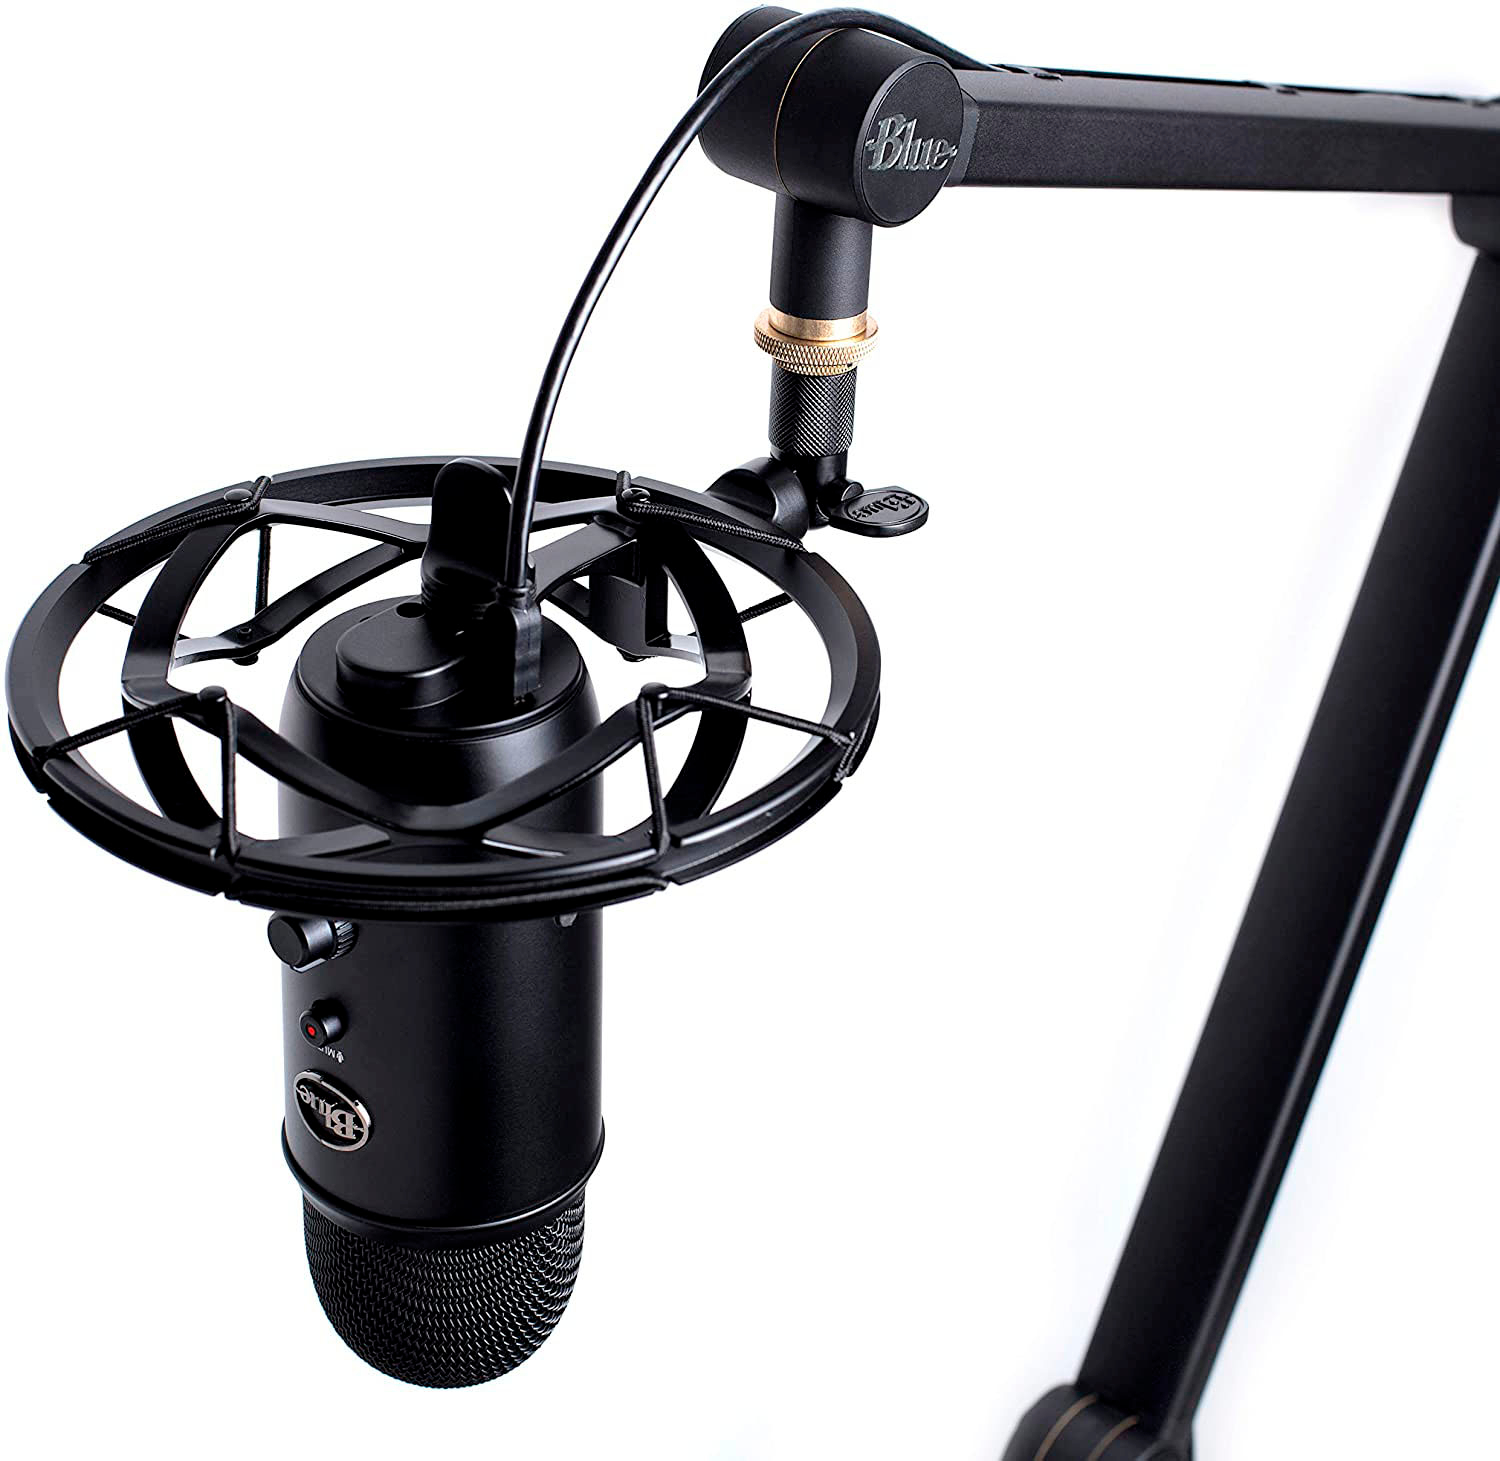 Blue Compass Premium Broadcast microphone arm